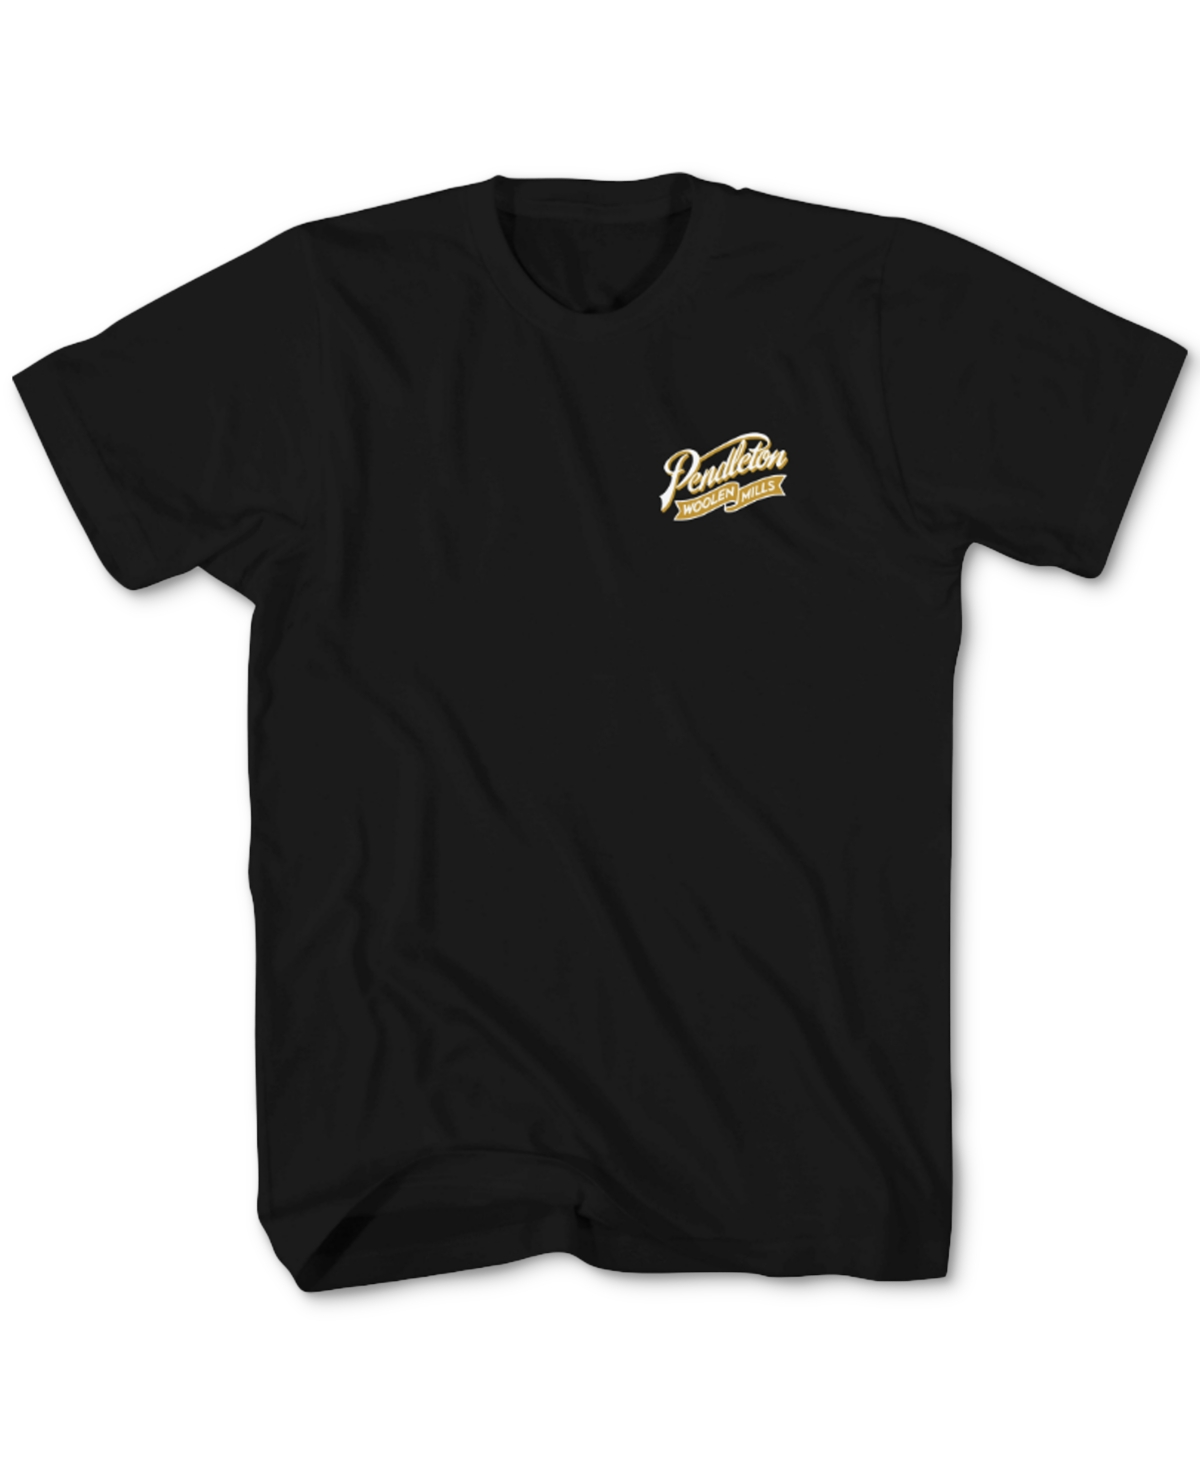 Men's Ribbon Logo Crewneck Short Sleeve Graphic T-Shirt - Black/gold